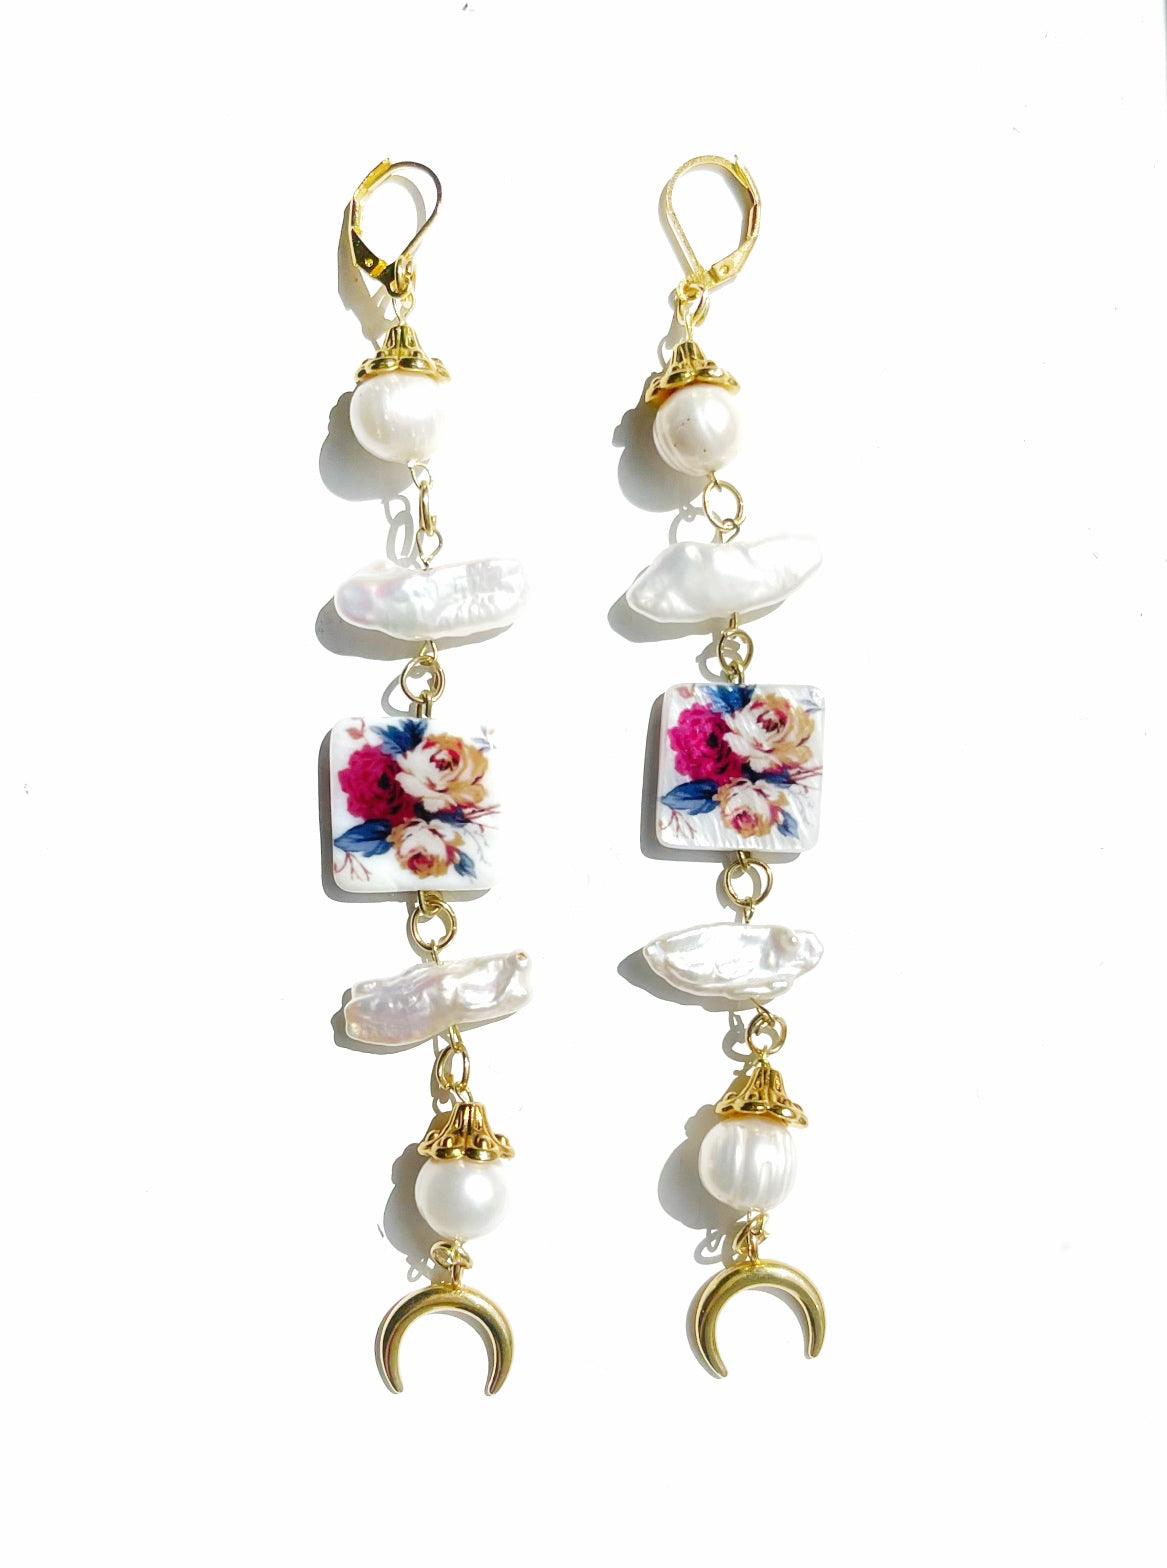 Floral pearl drop earrings with moon charm, white freshwater pearl dangle earrings, statement earrings, summer earrings